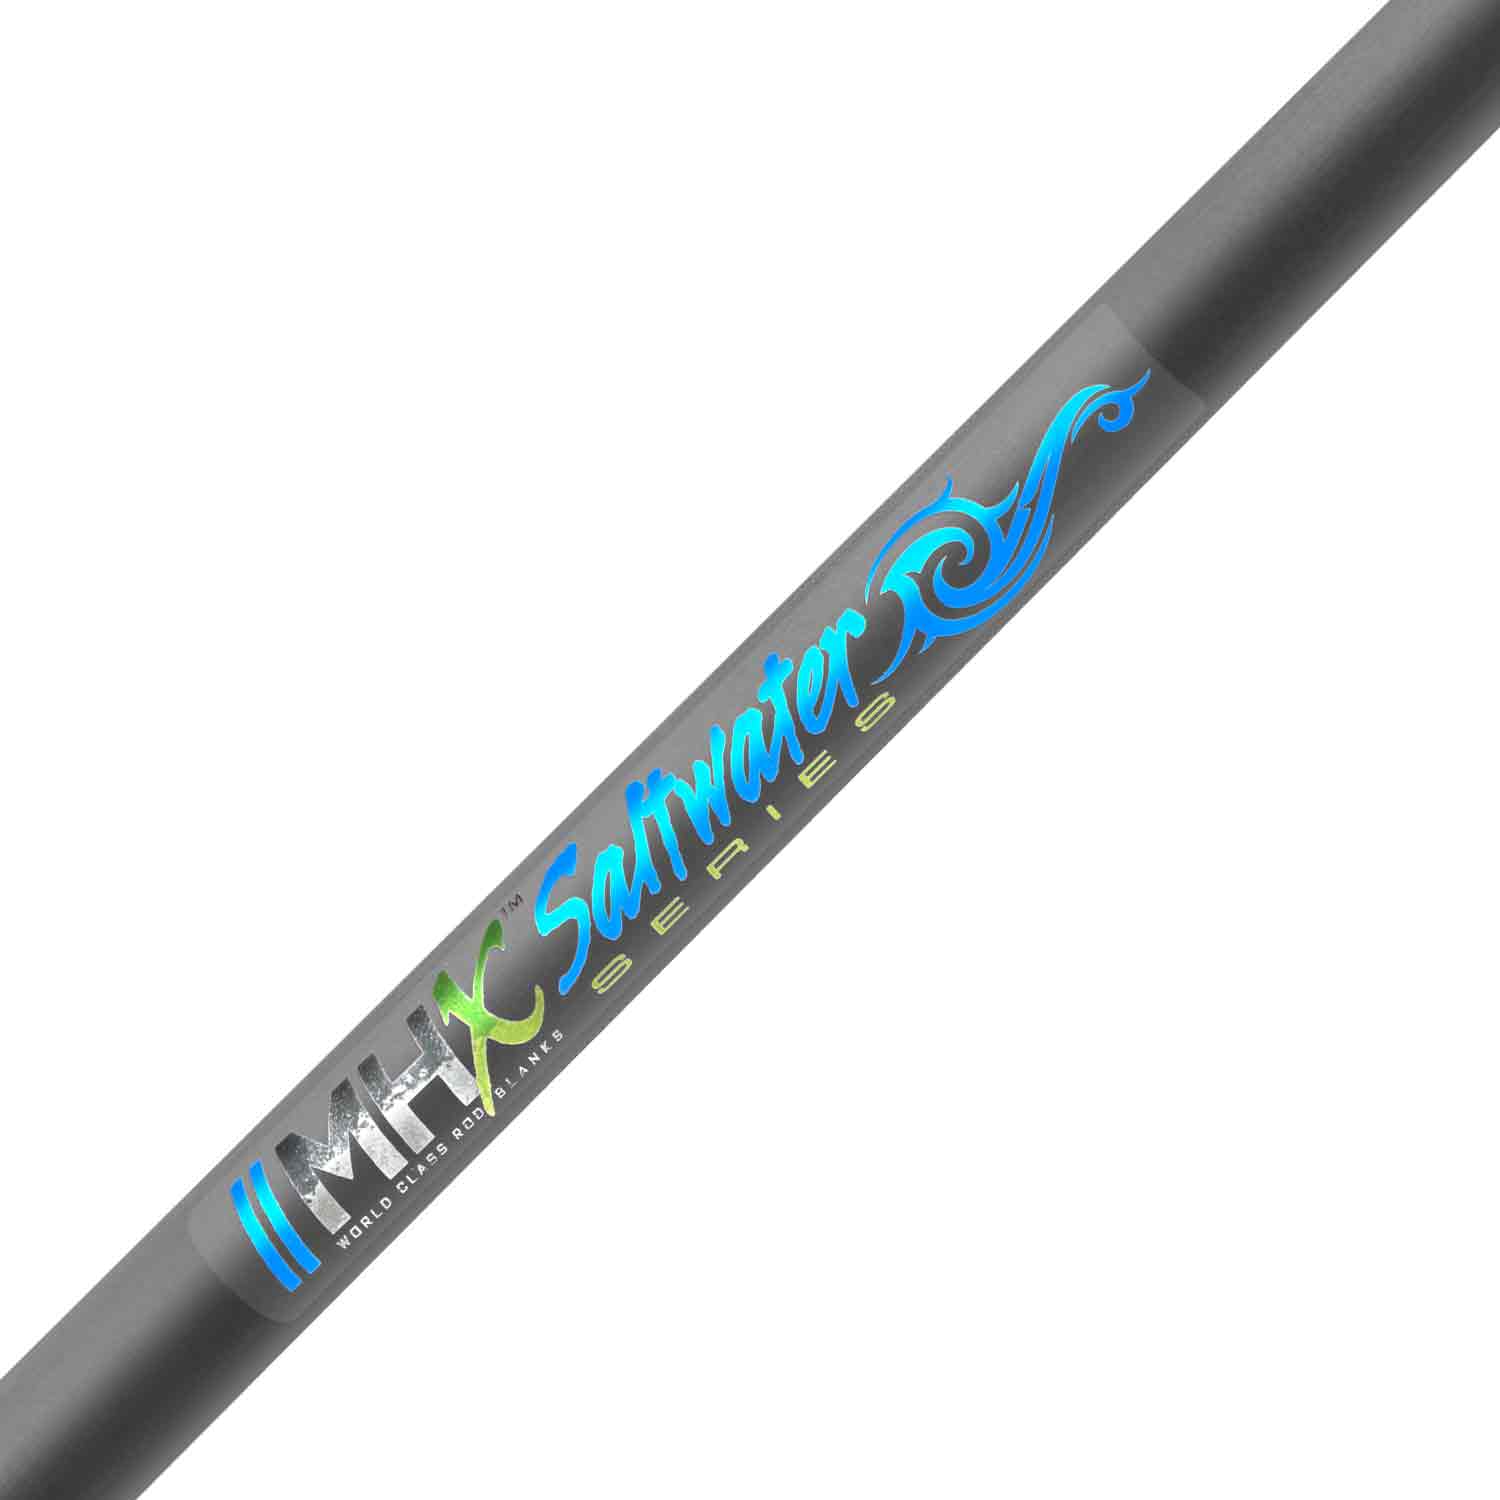 MHX 7'6 Medium Composite Saltwater Rod Blank - GFC90M